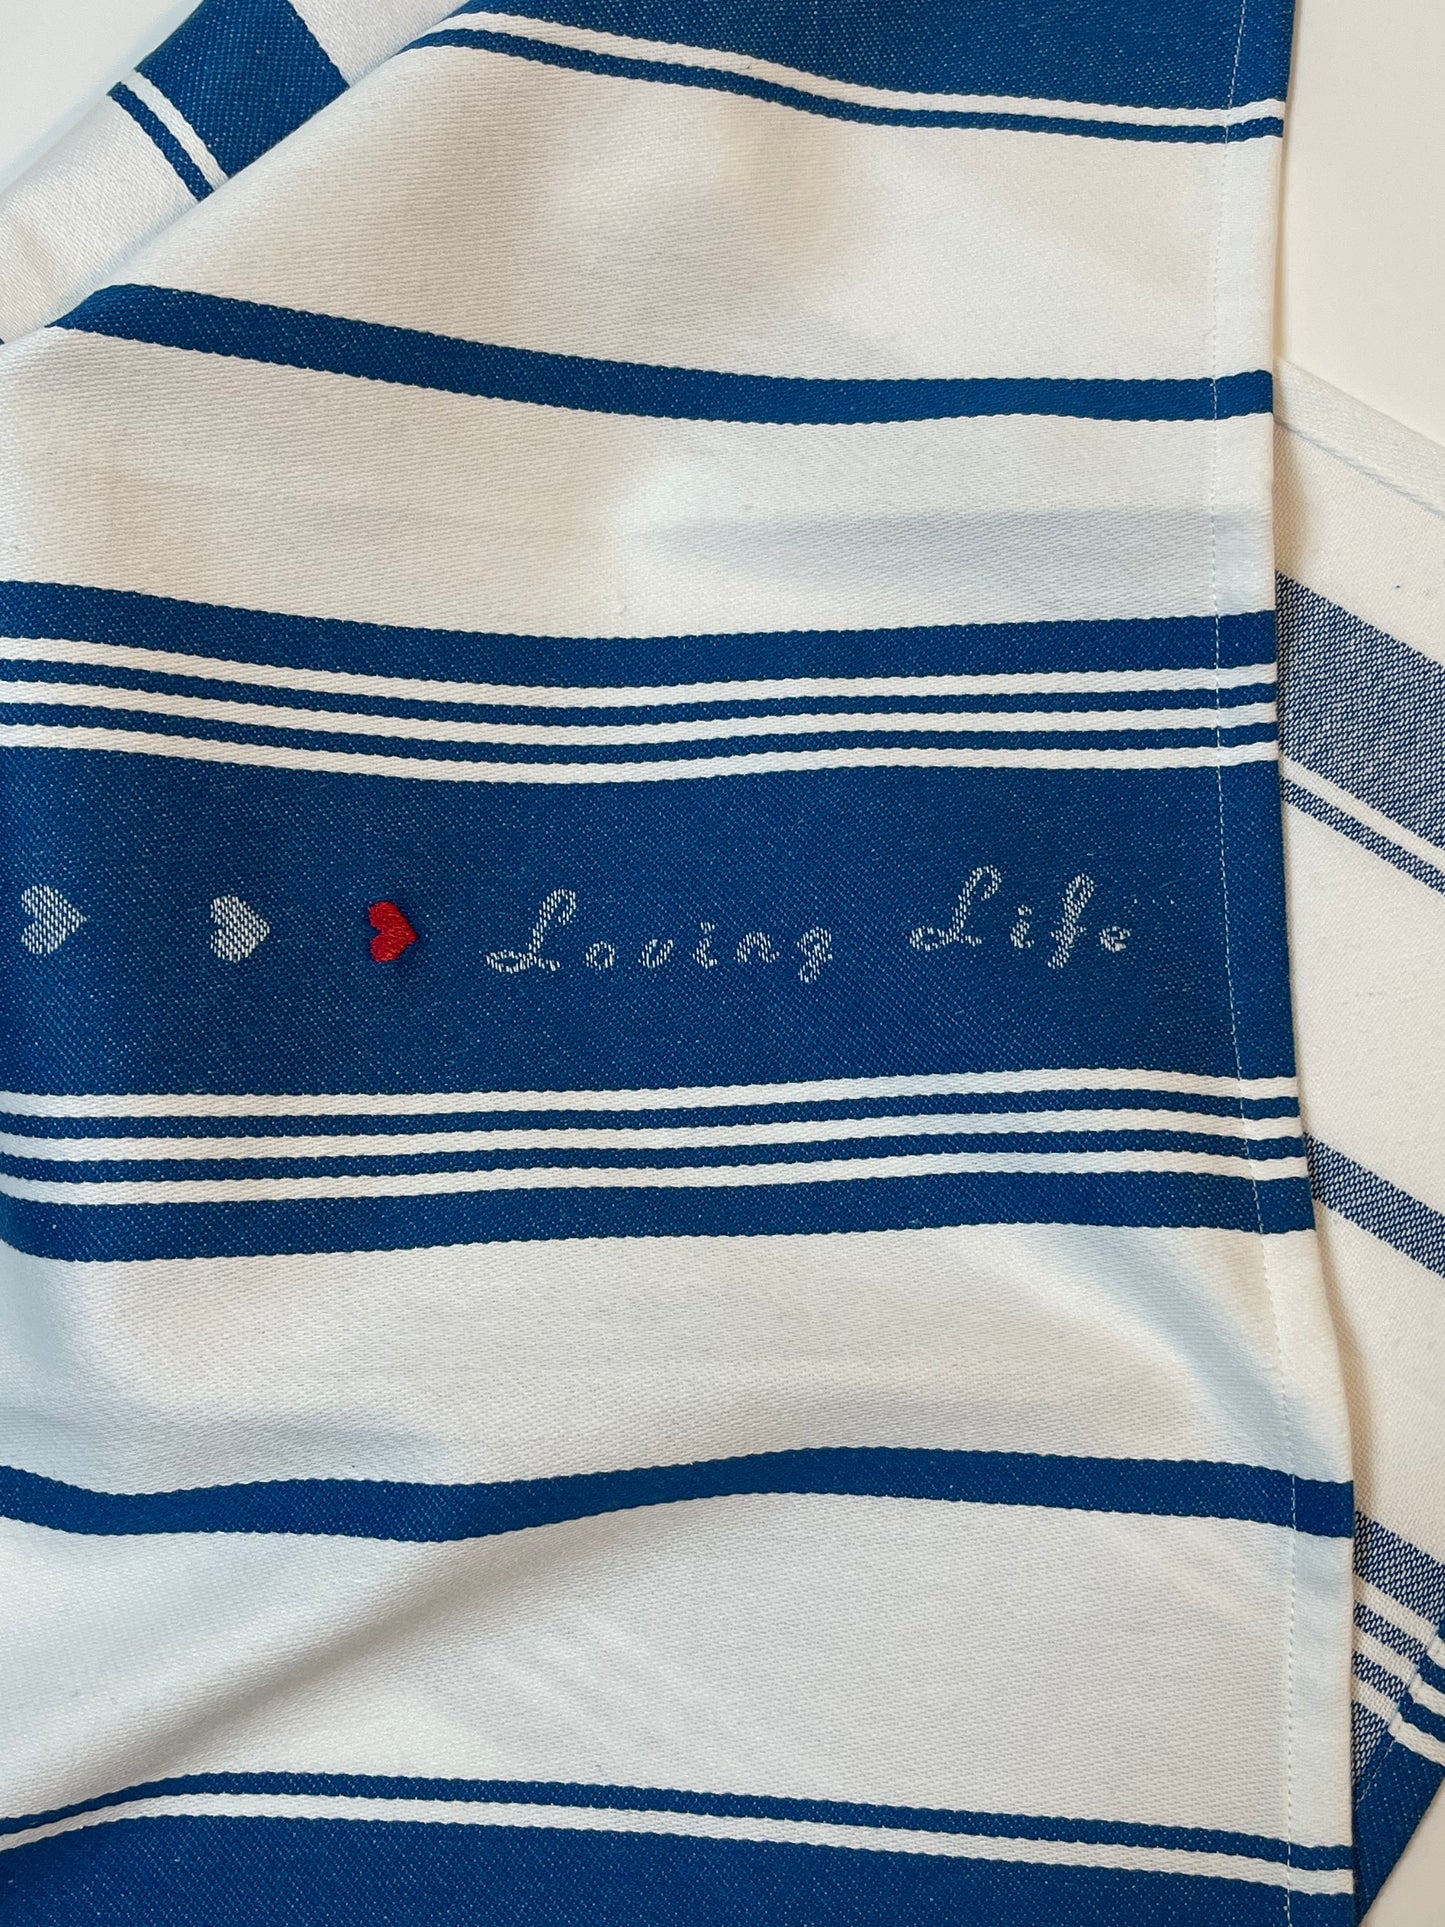 "Loving Life" Kitchen Towel